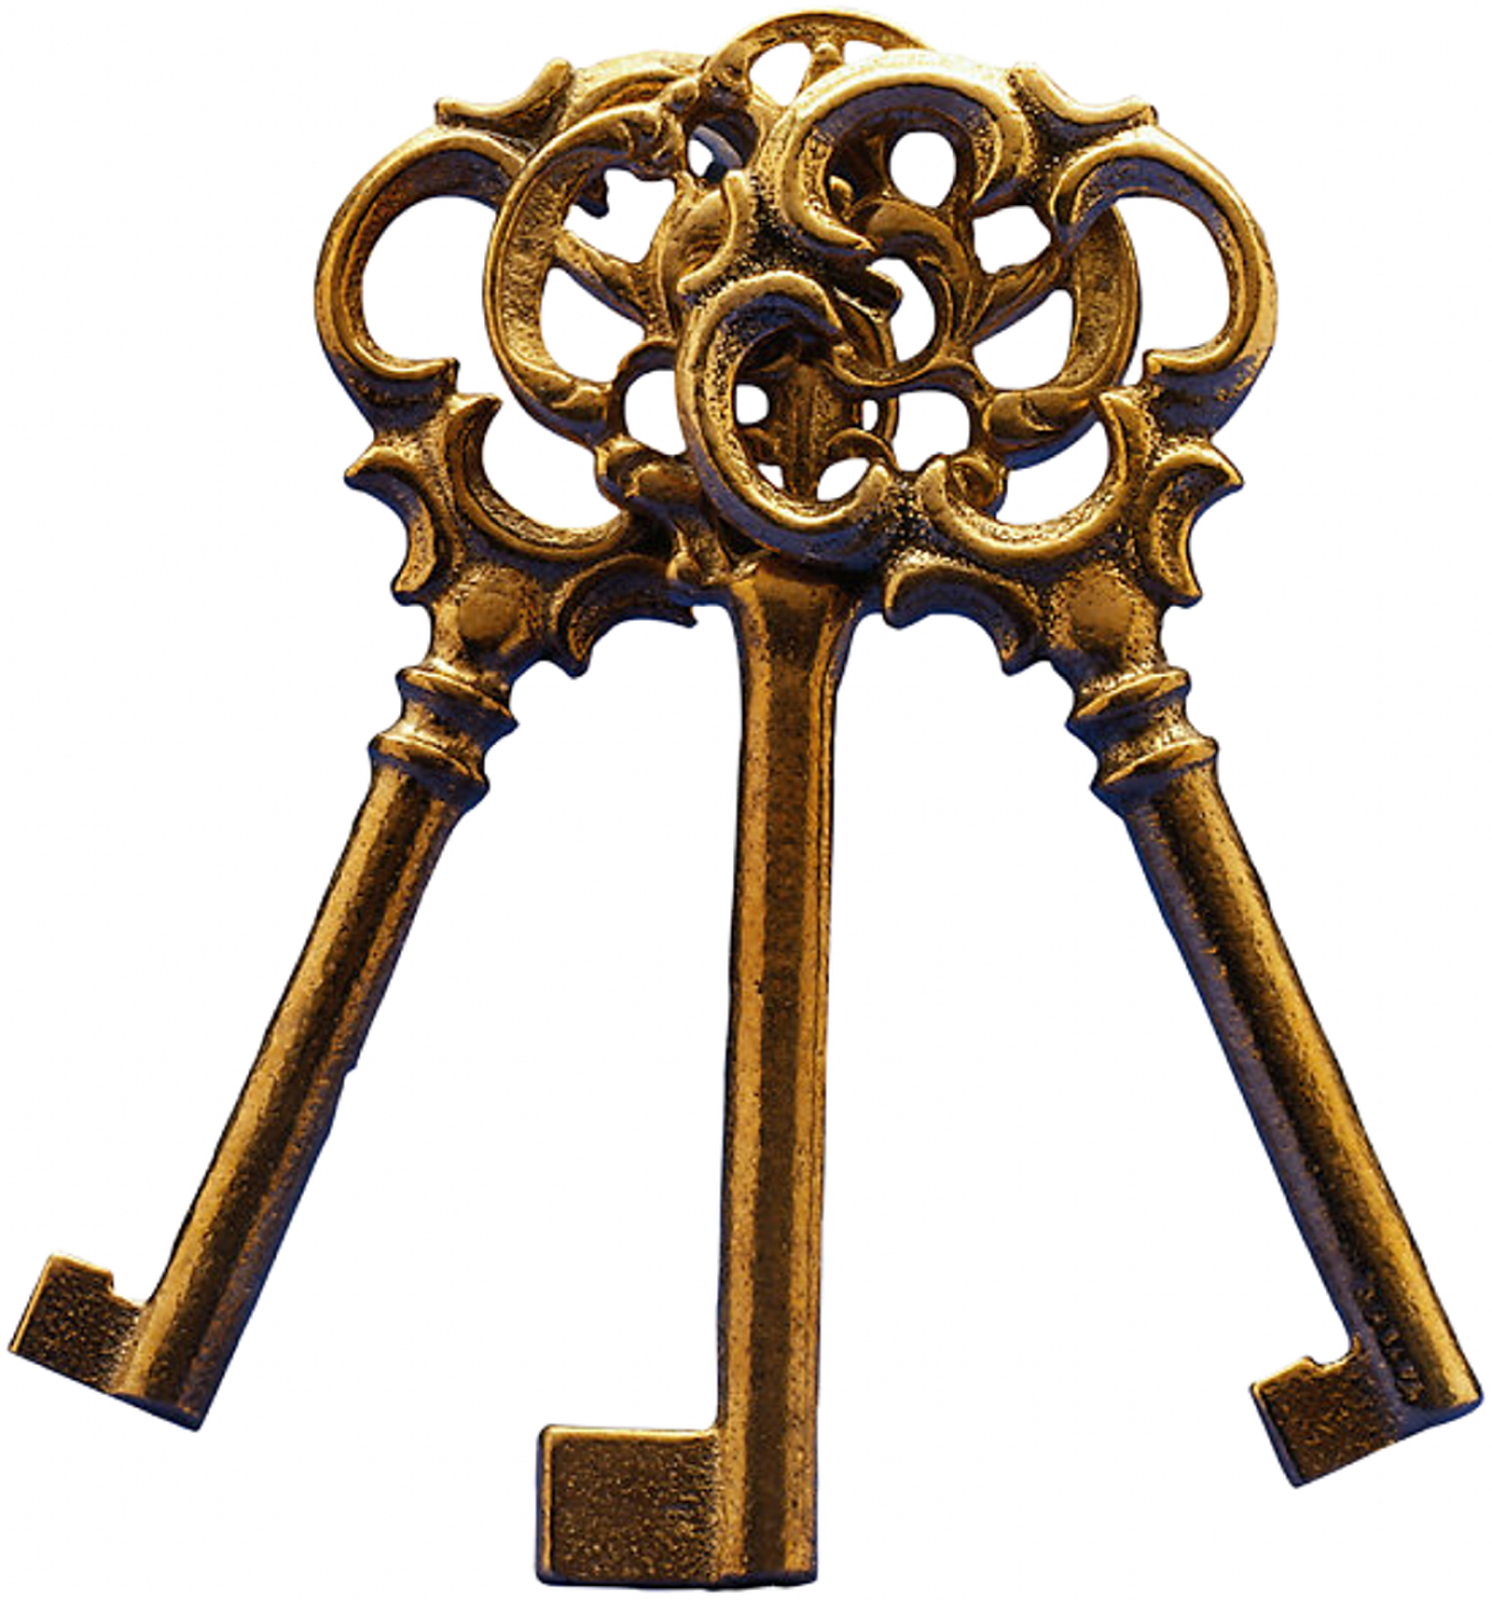 Keys picture. Старинный ключ Форт Боярд. Форт Боярд связка ключей. Старинный ключ. Старинные ключи на прозрачном фоне.